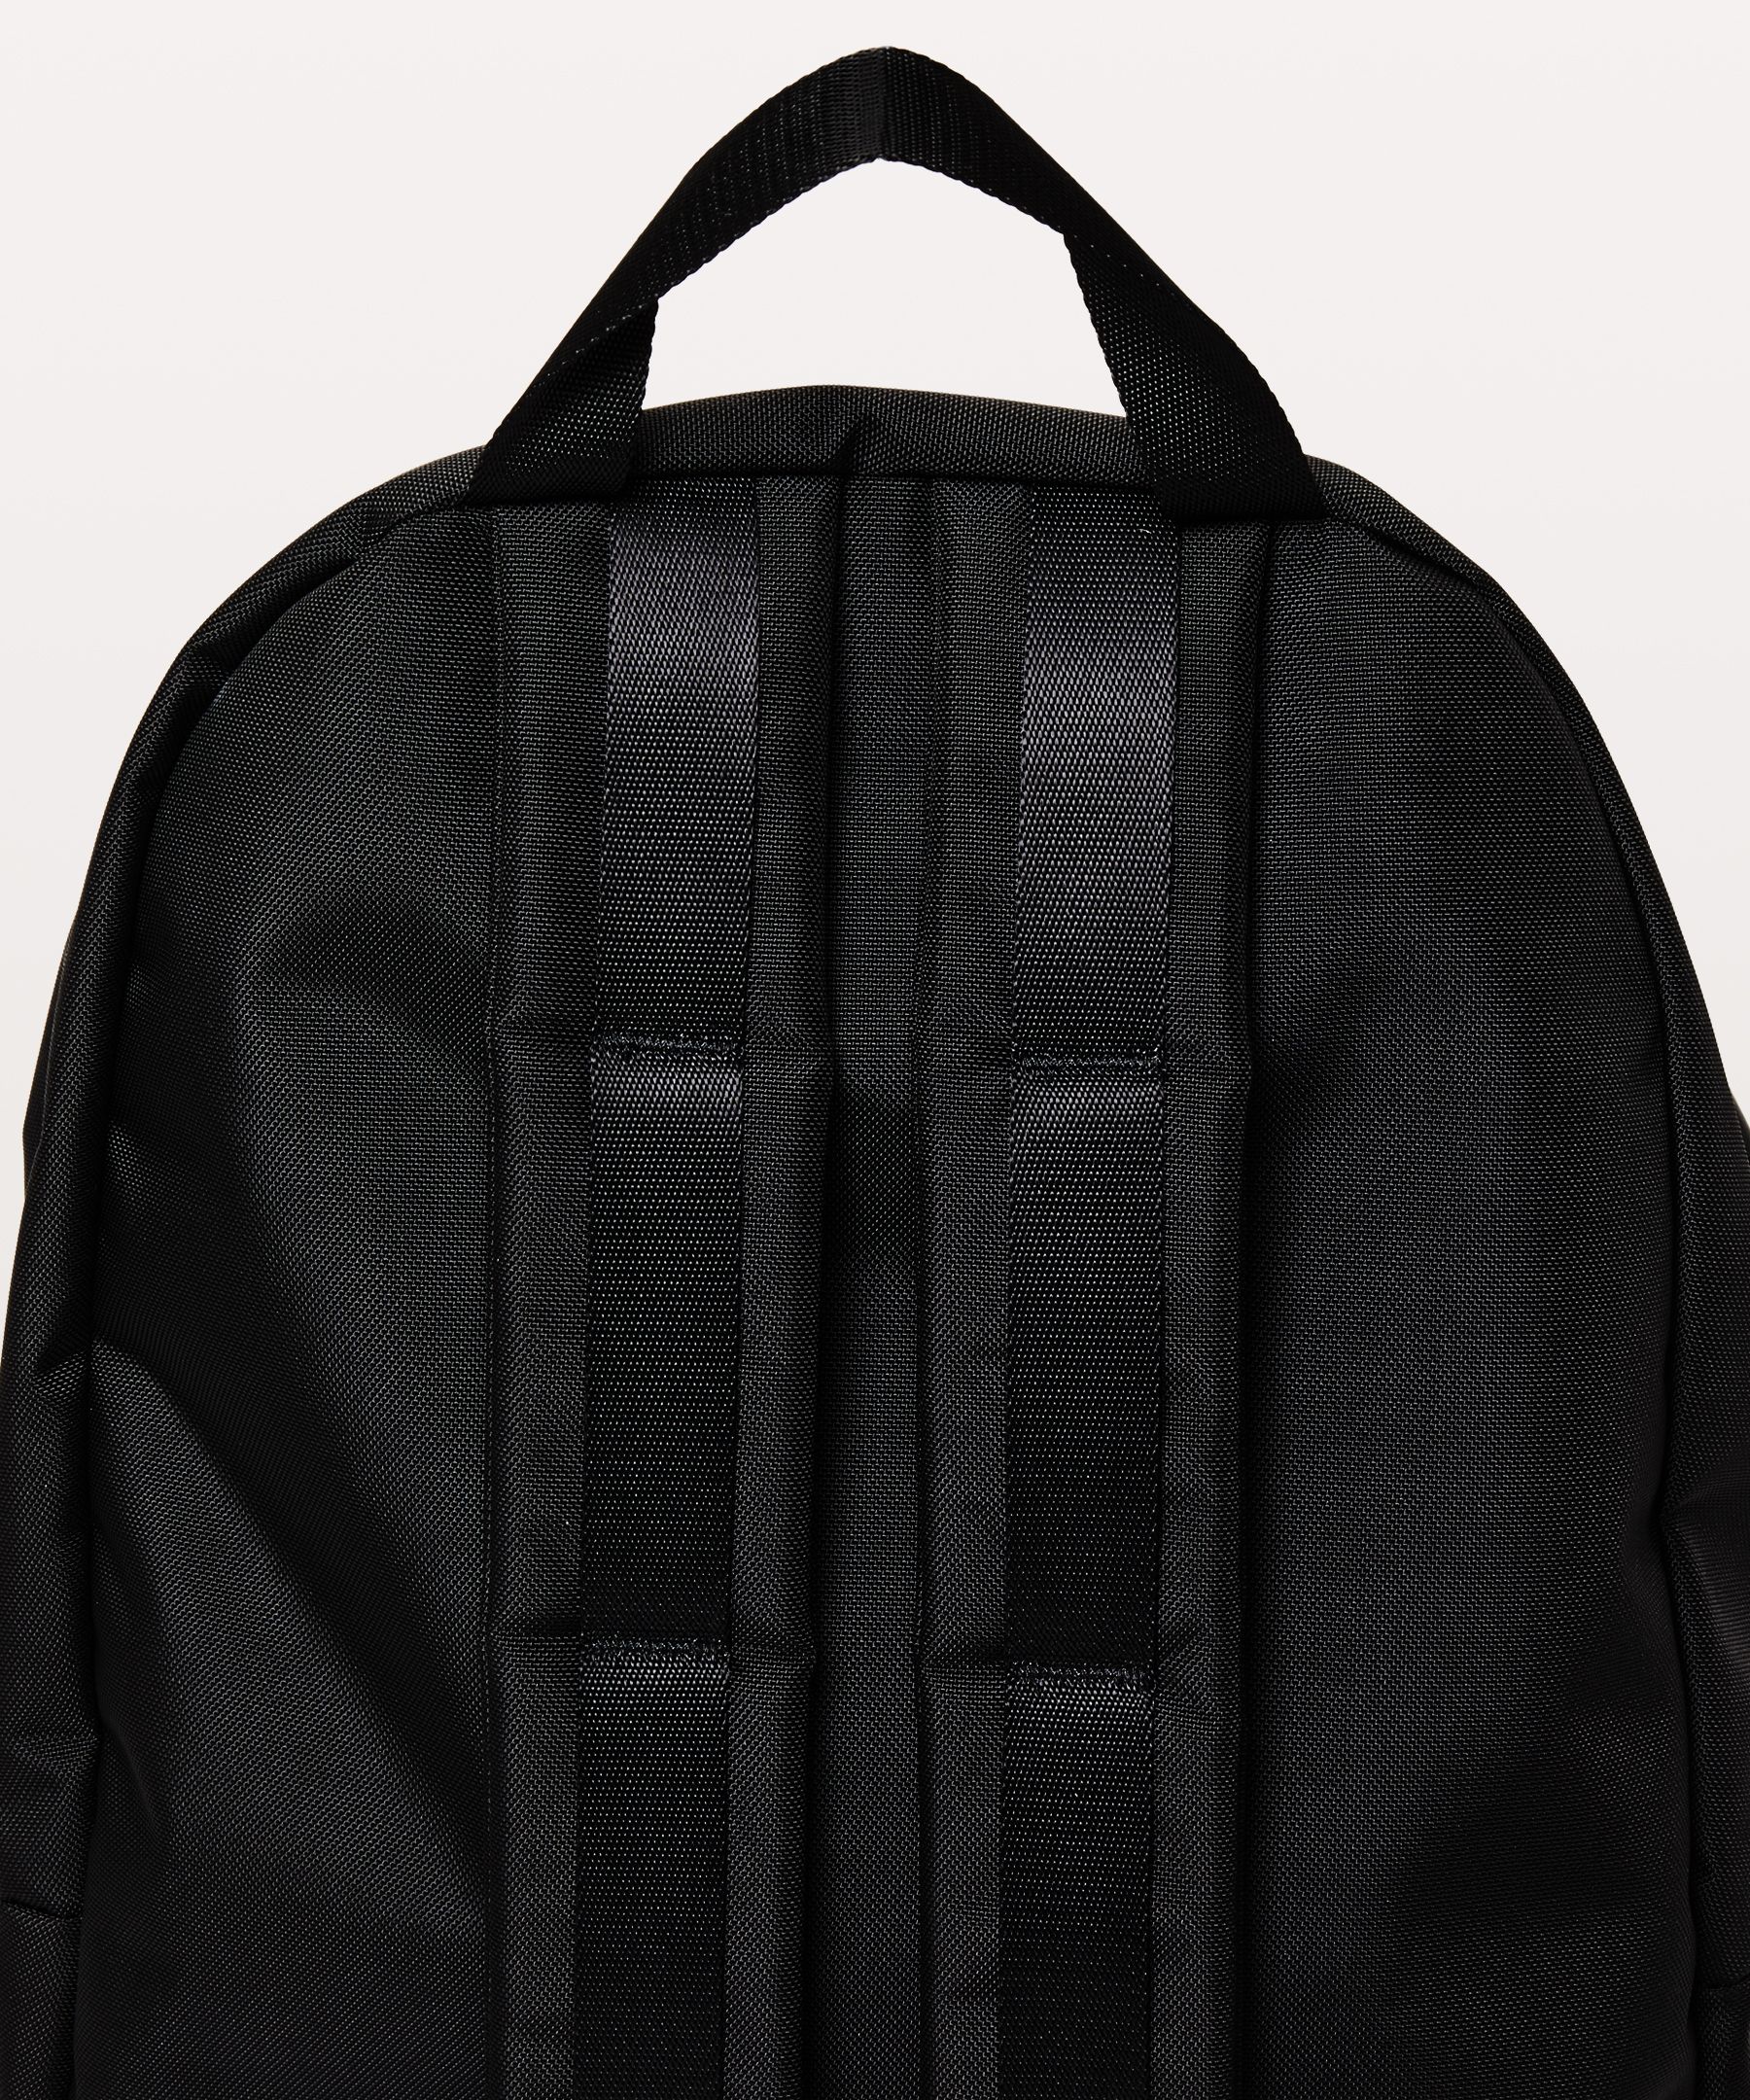 mainstay backpack lululemon